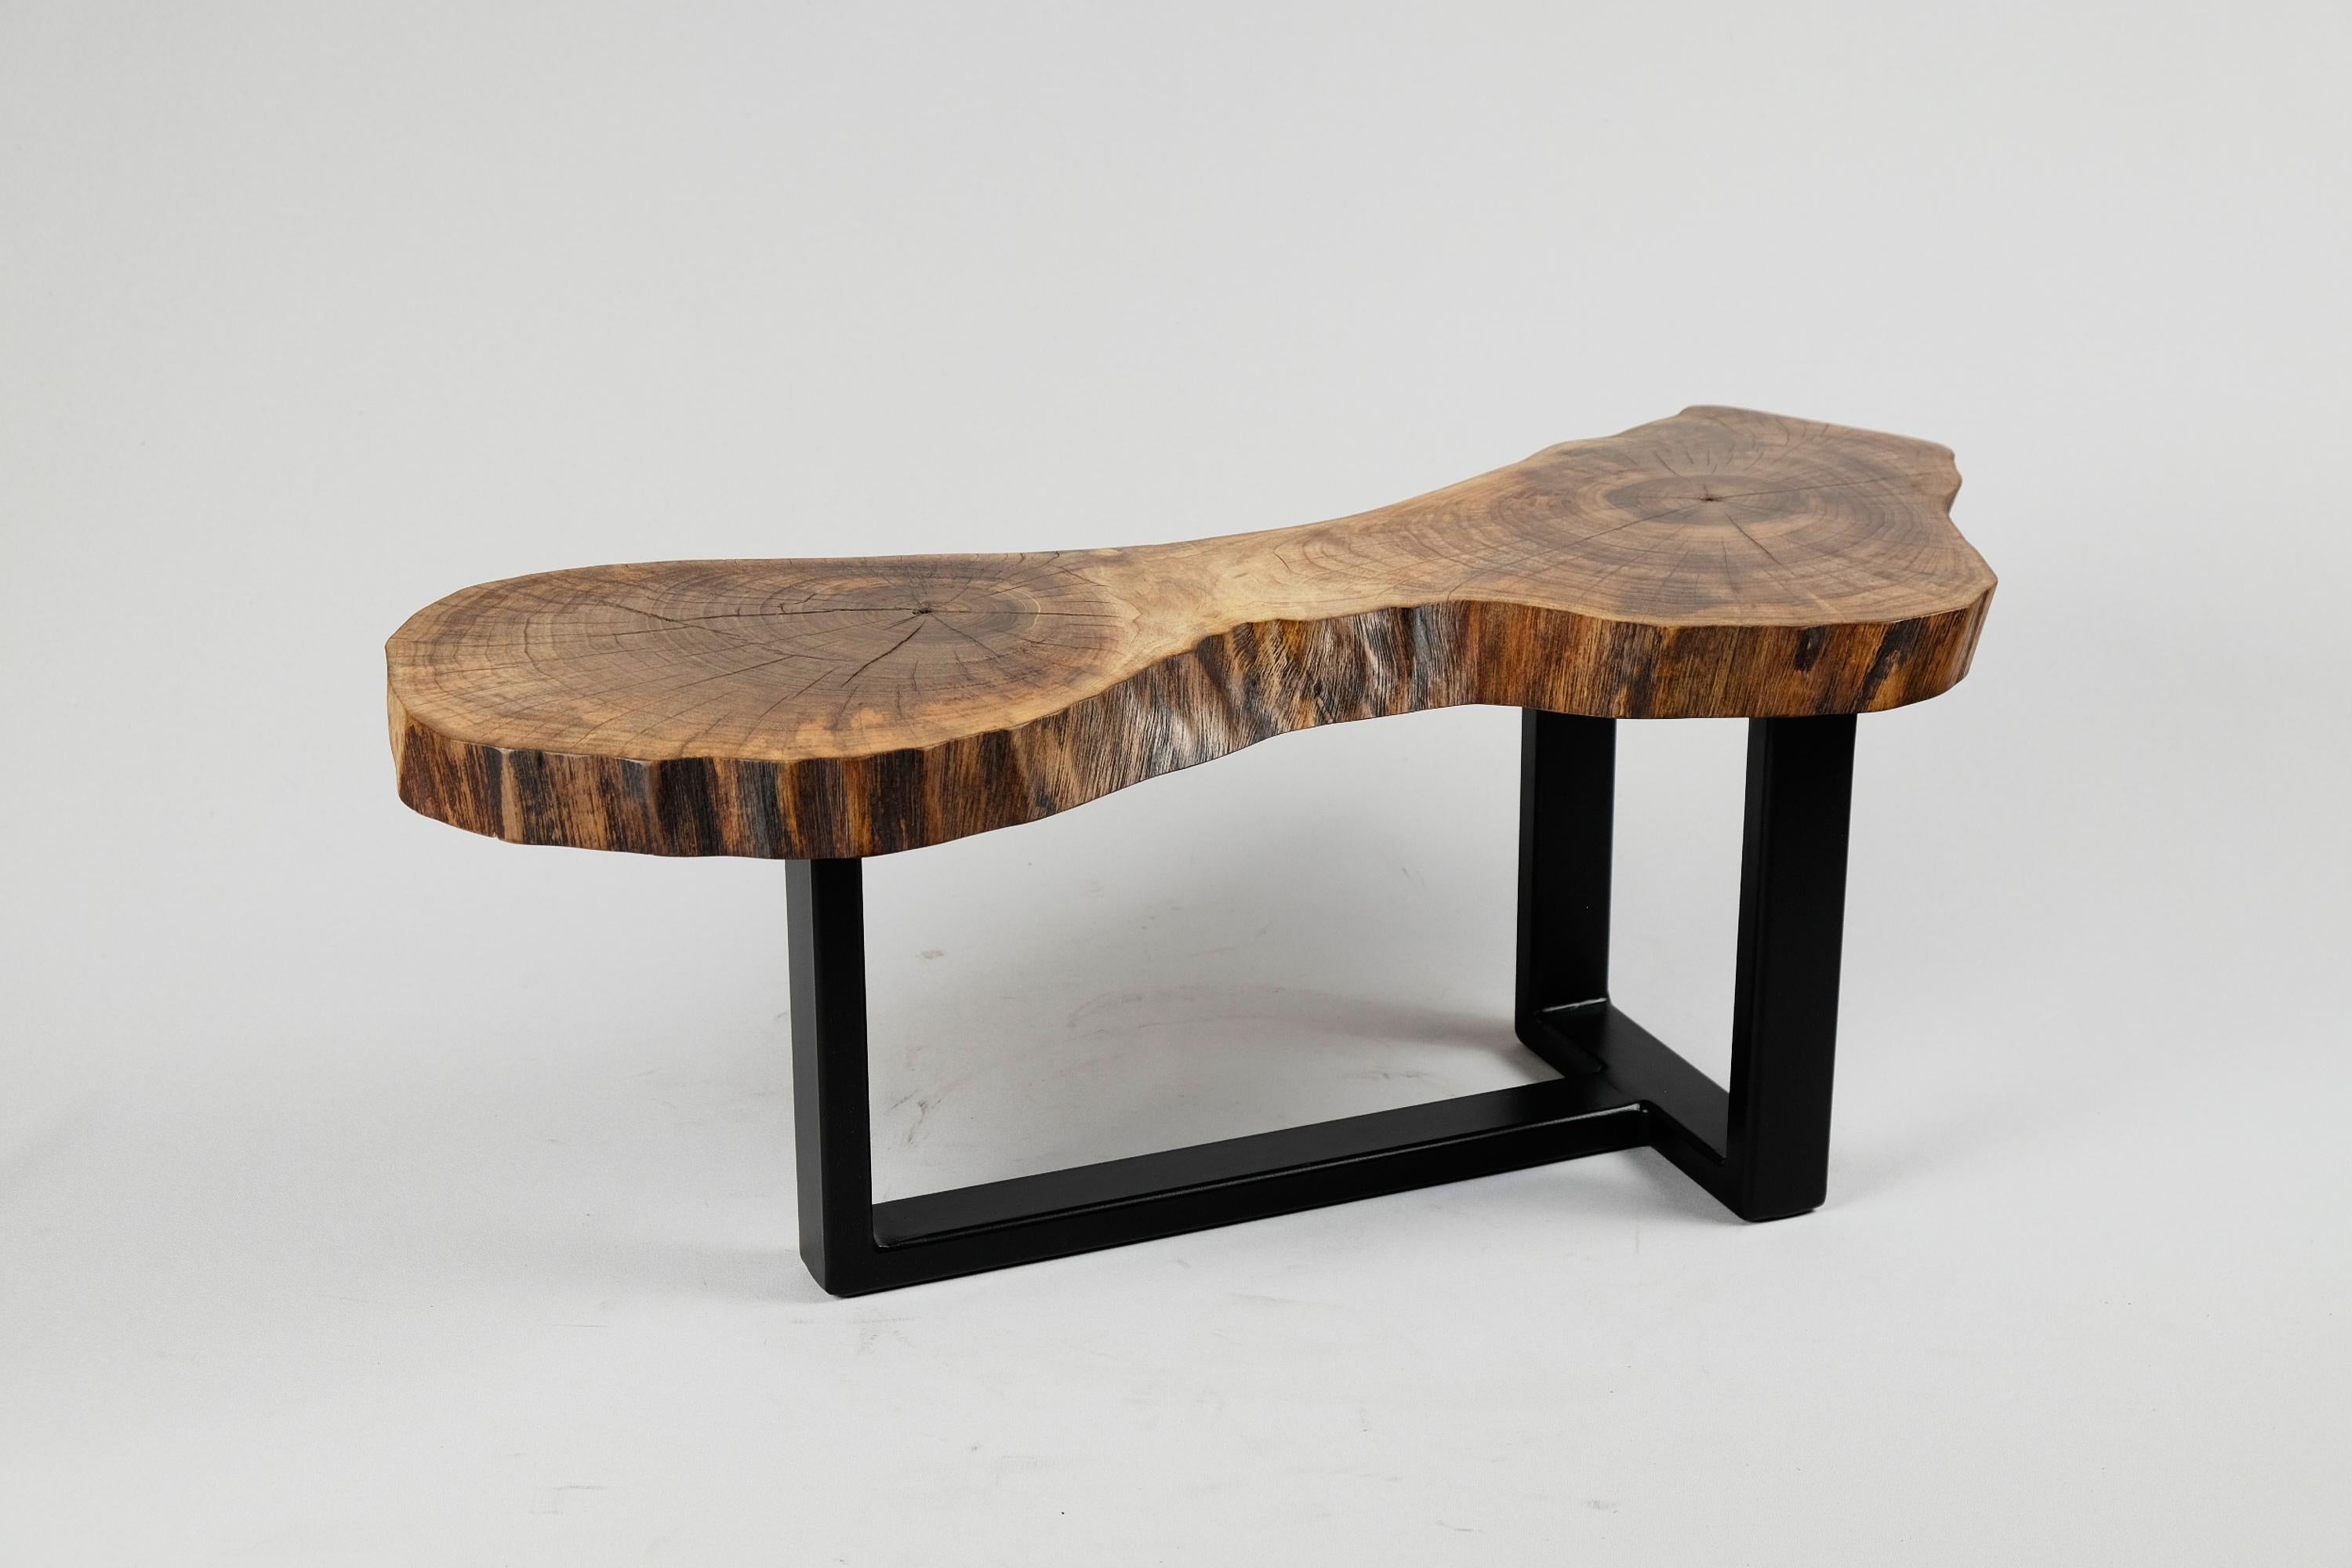 Original Contemporary Design, Burnt Oak with Steel, Unique Side Table, Logniture 6